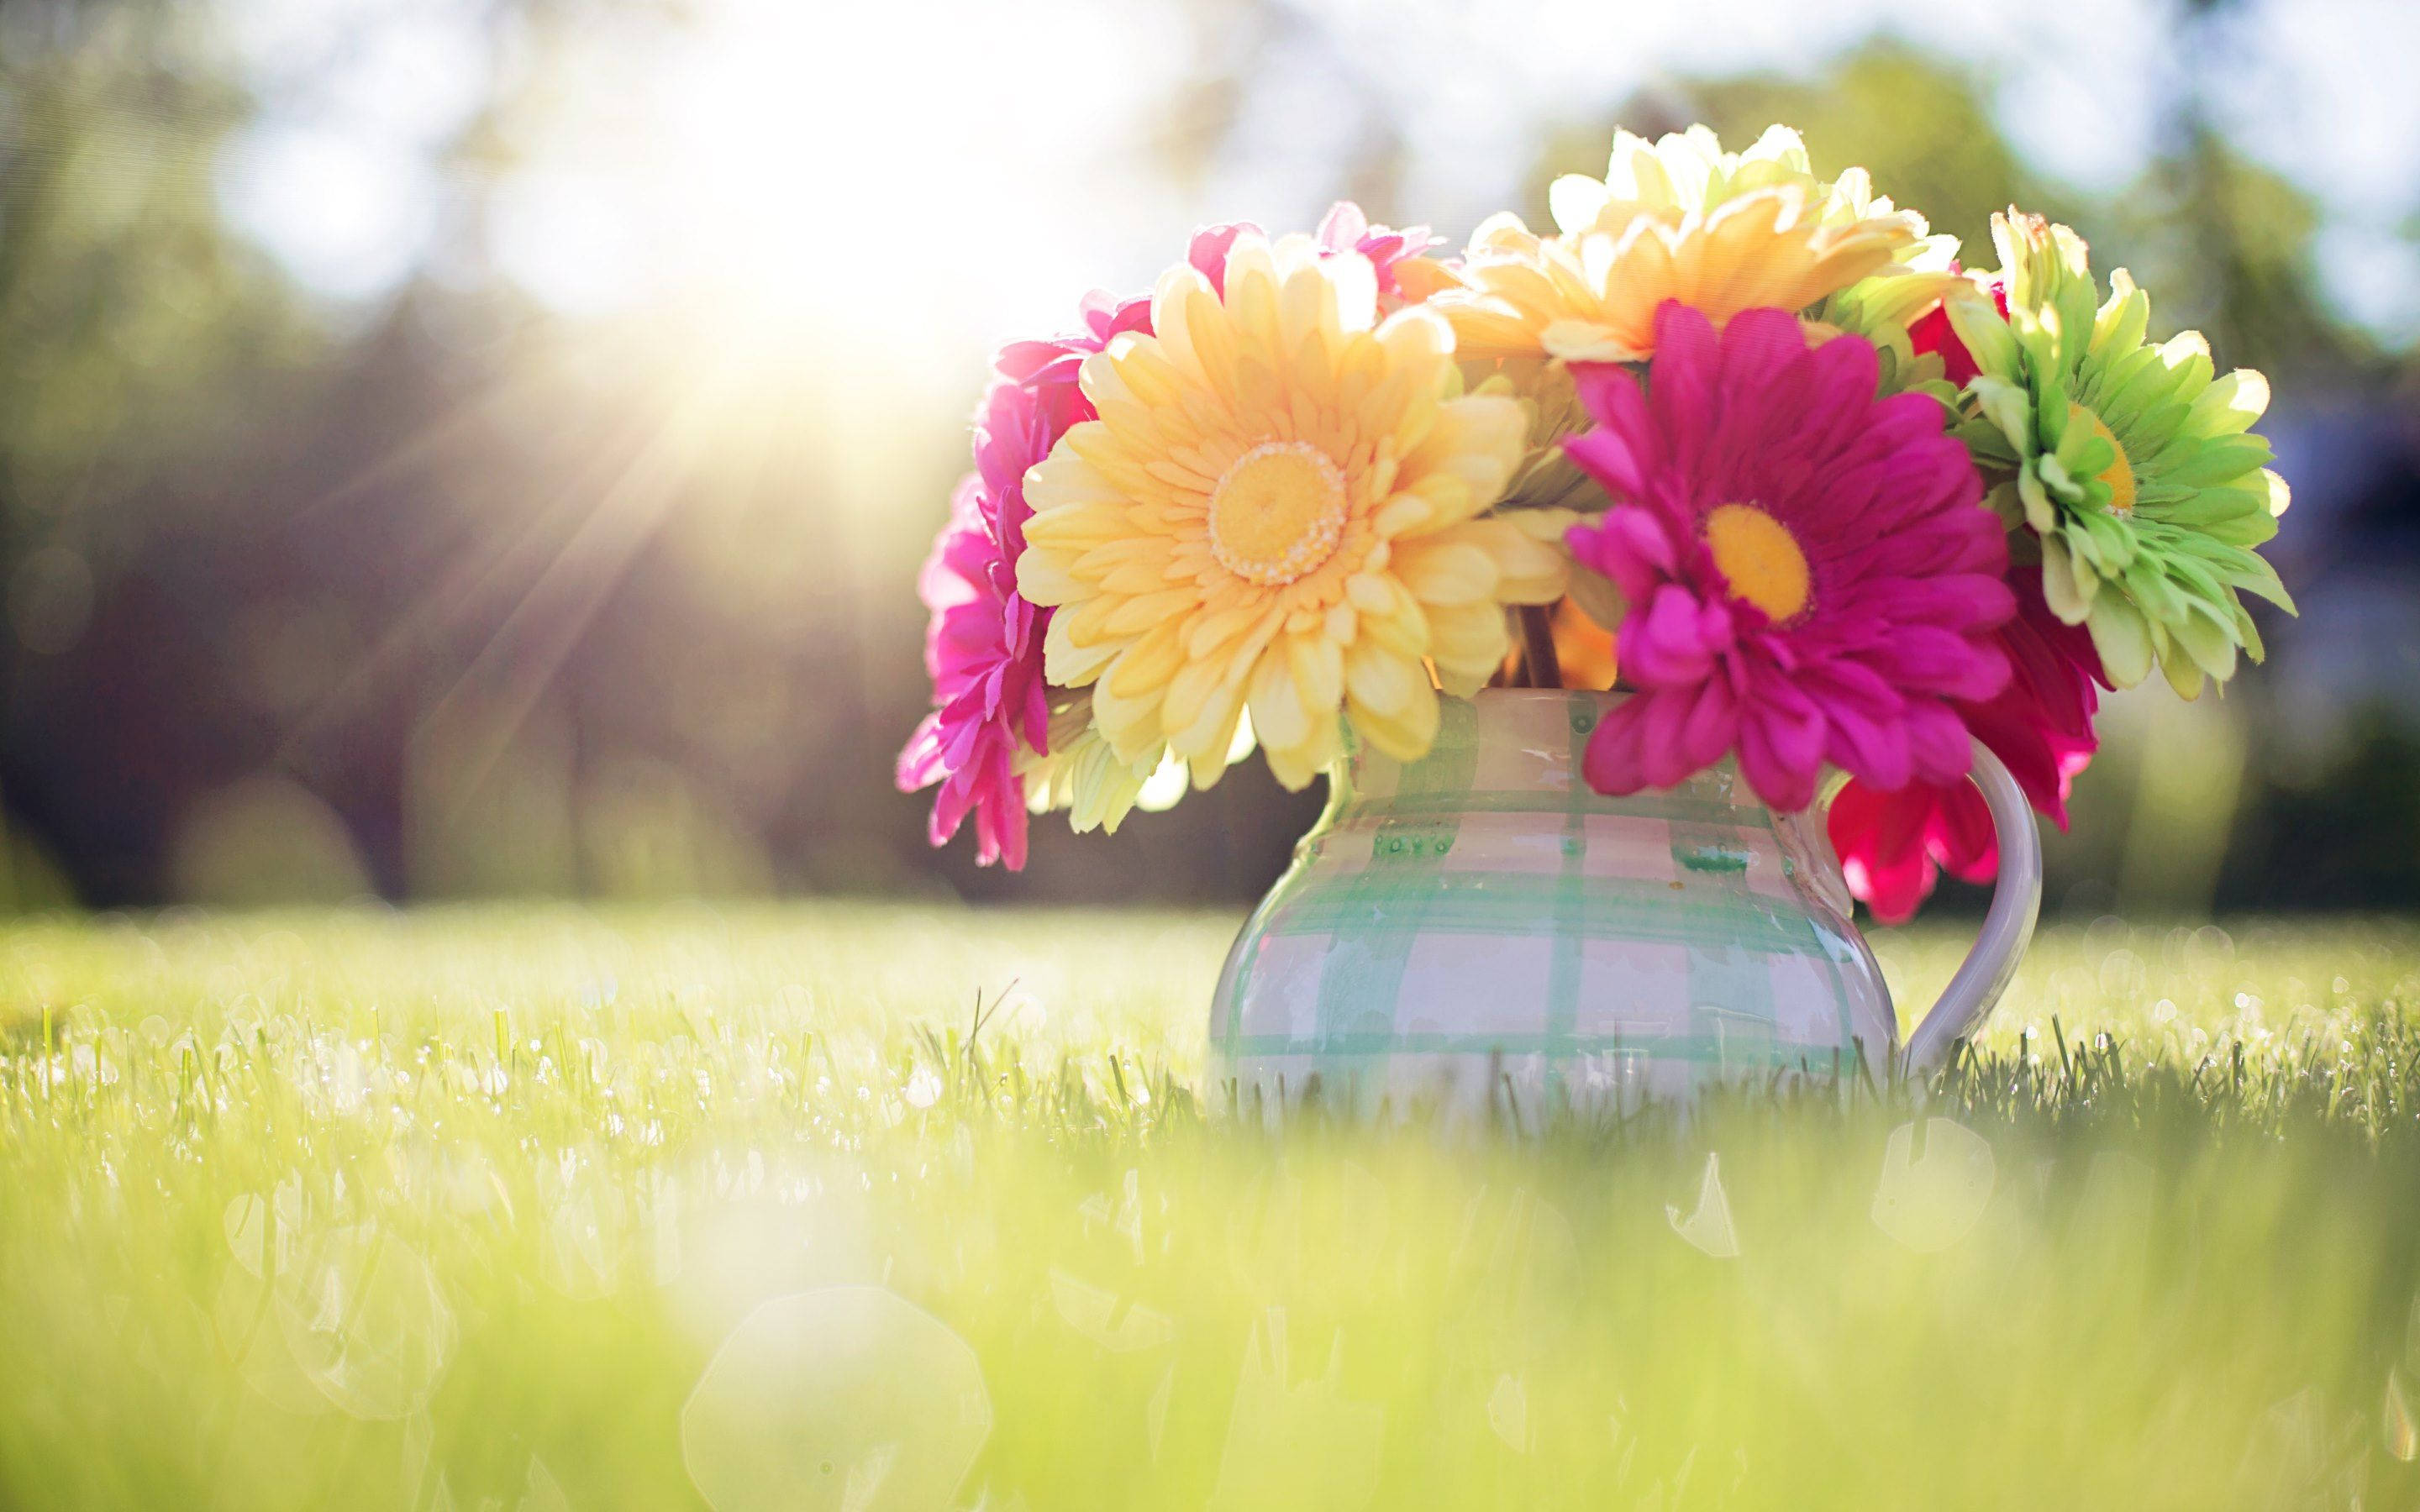 Spring Flowers In Vase Background